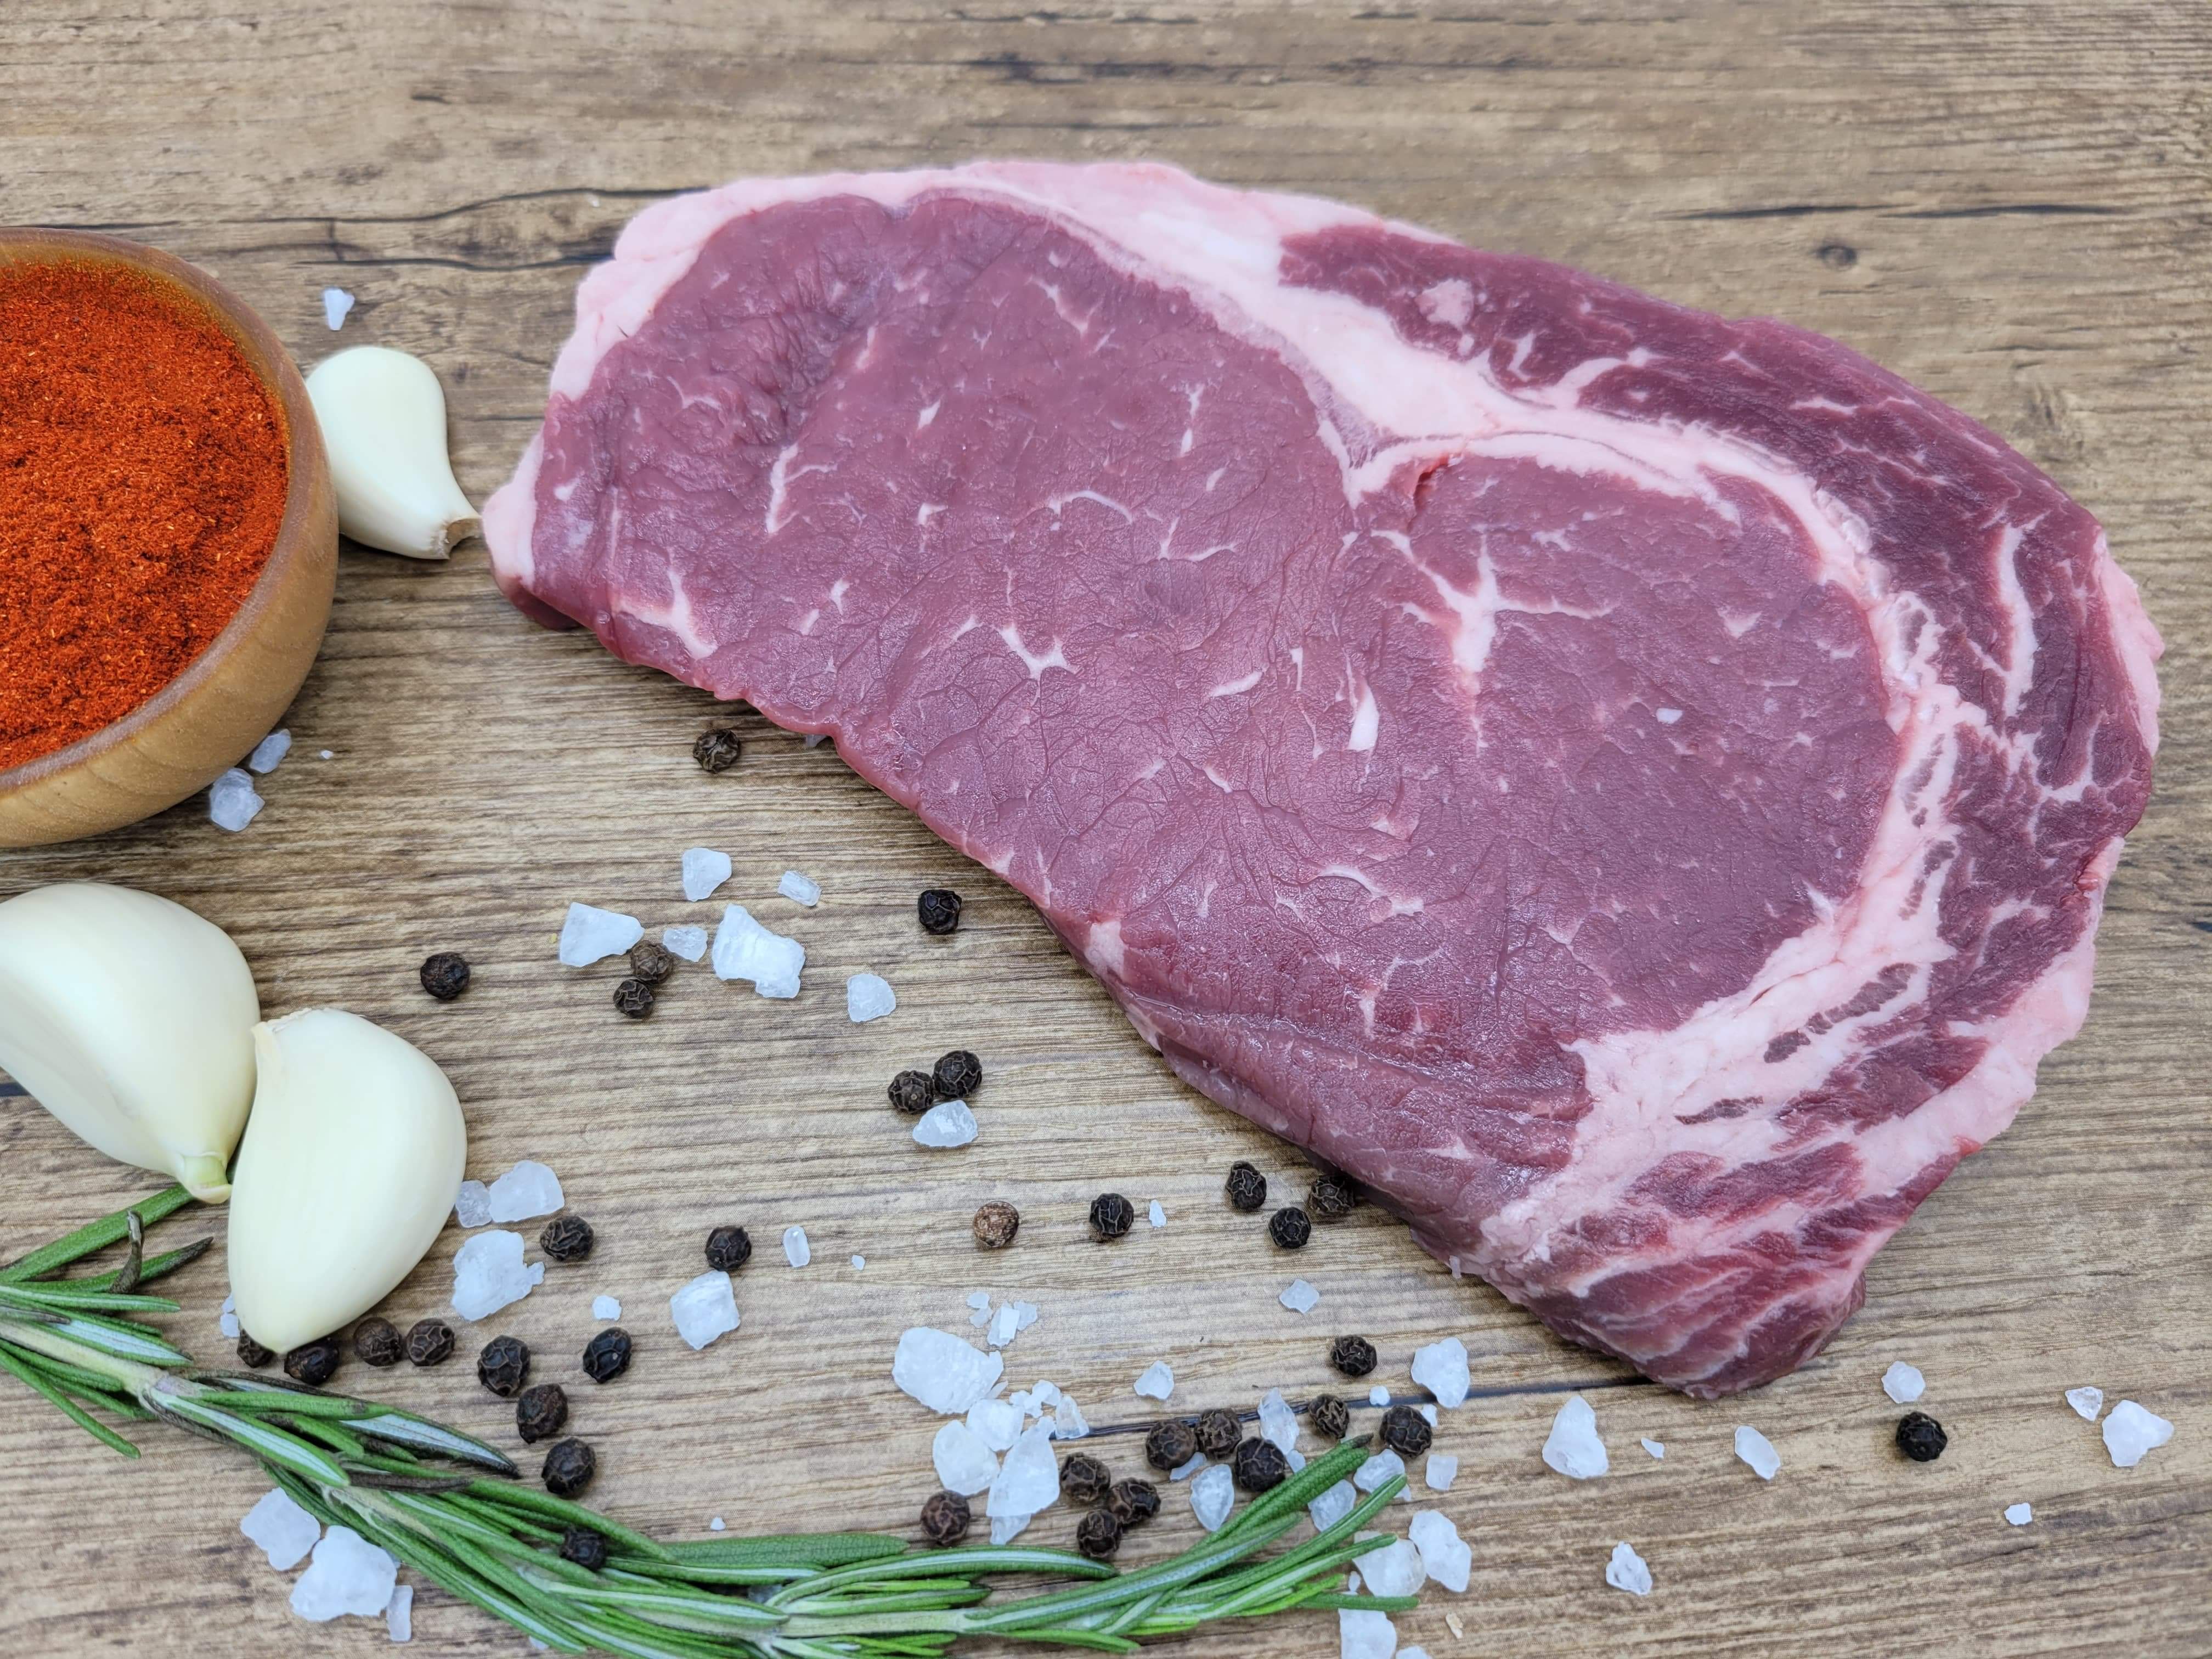 Beef - Ribeye Steak (Boneless) 18oz AAA 40+ Days Aged Grass-Fed Ontario